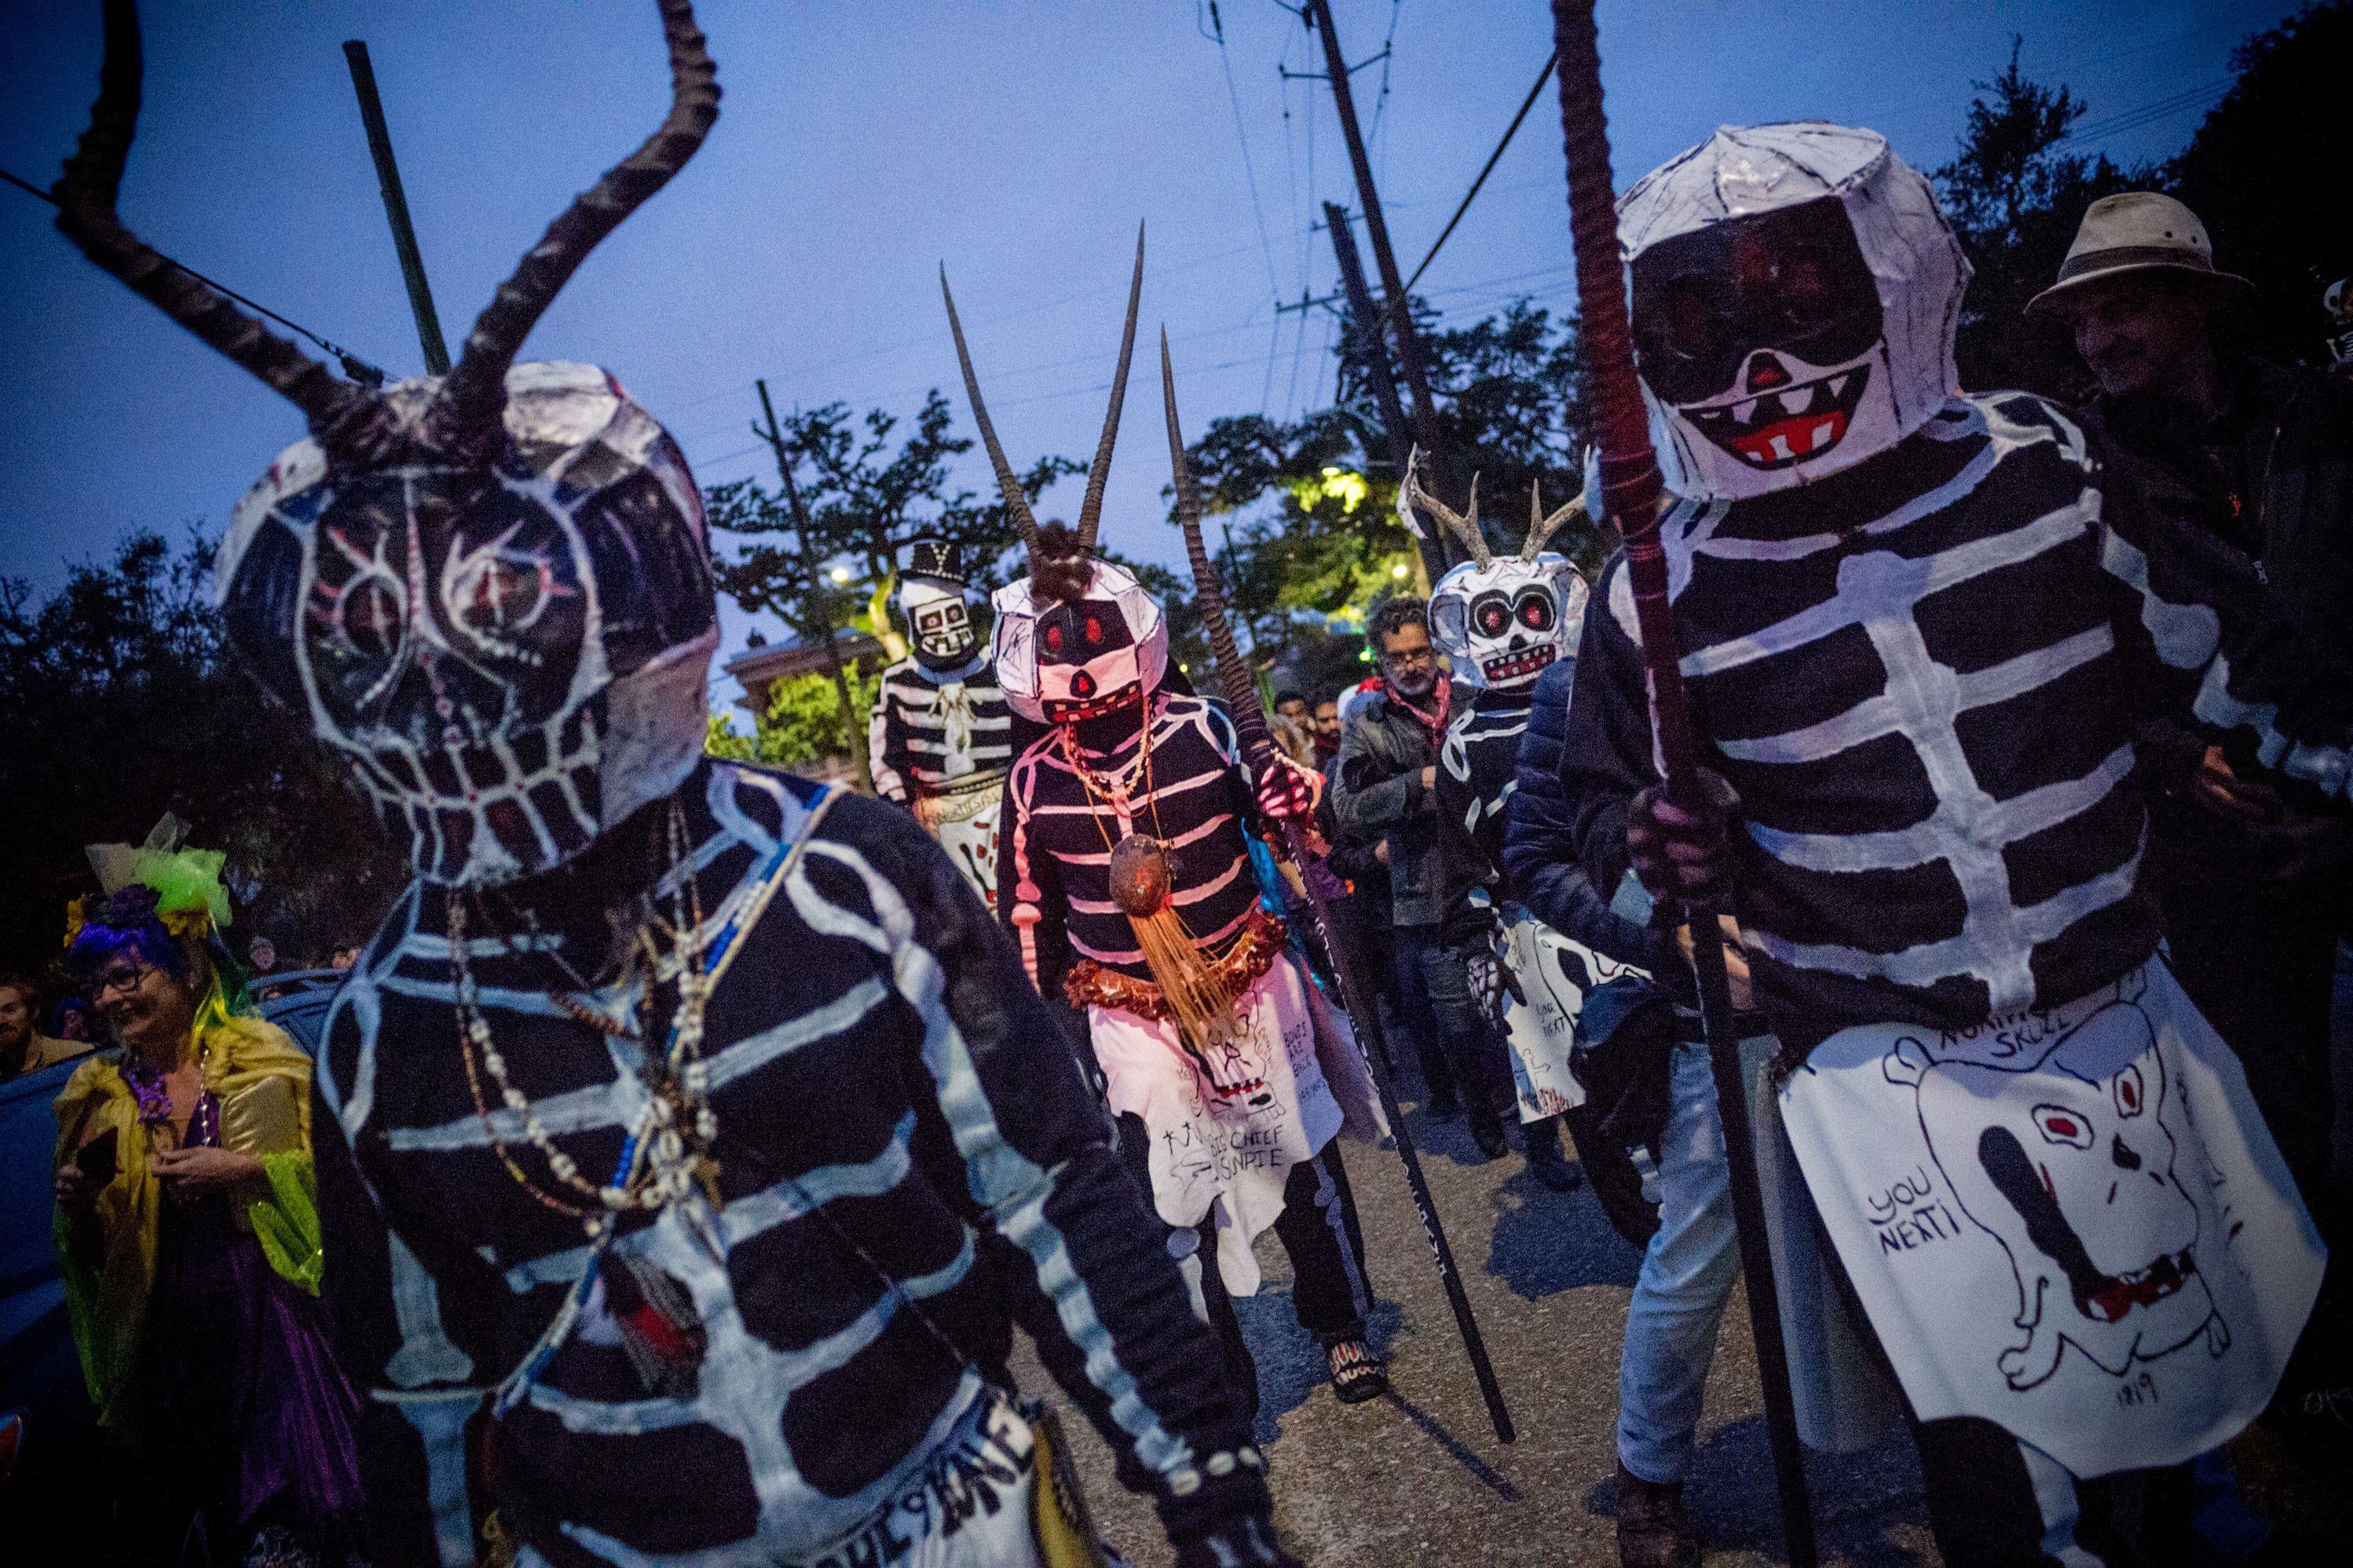 The Skull and Bones Gang, dressed in skeleton costumes, walk down a street.